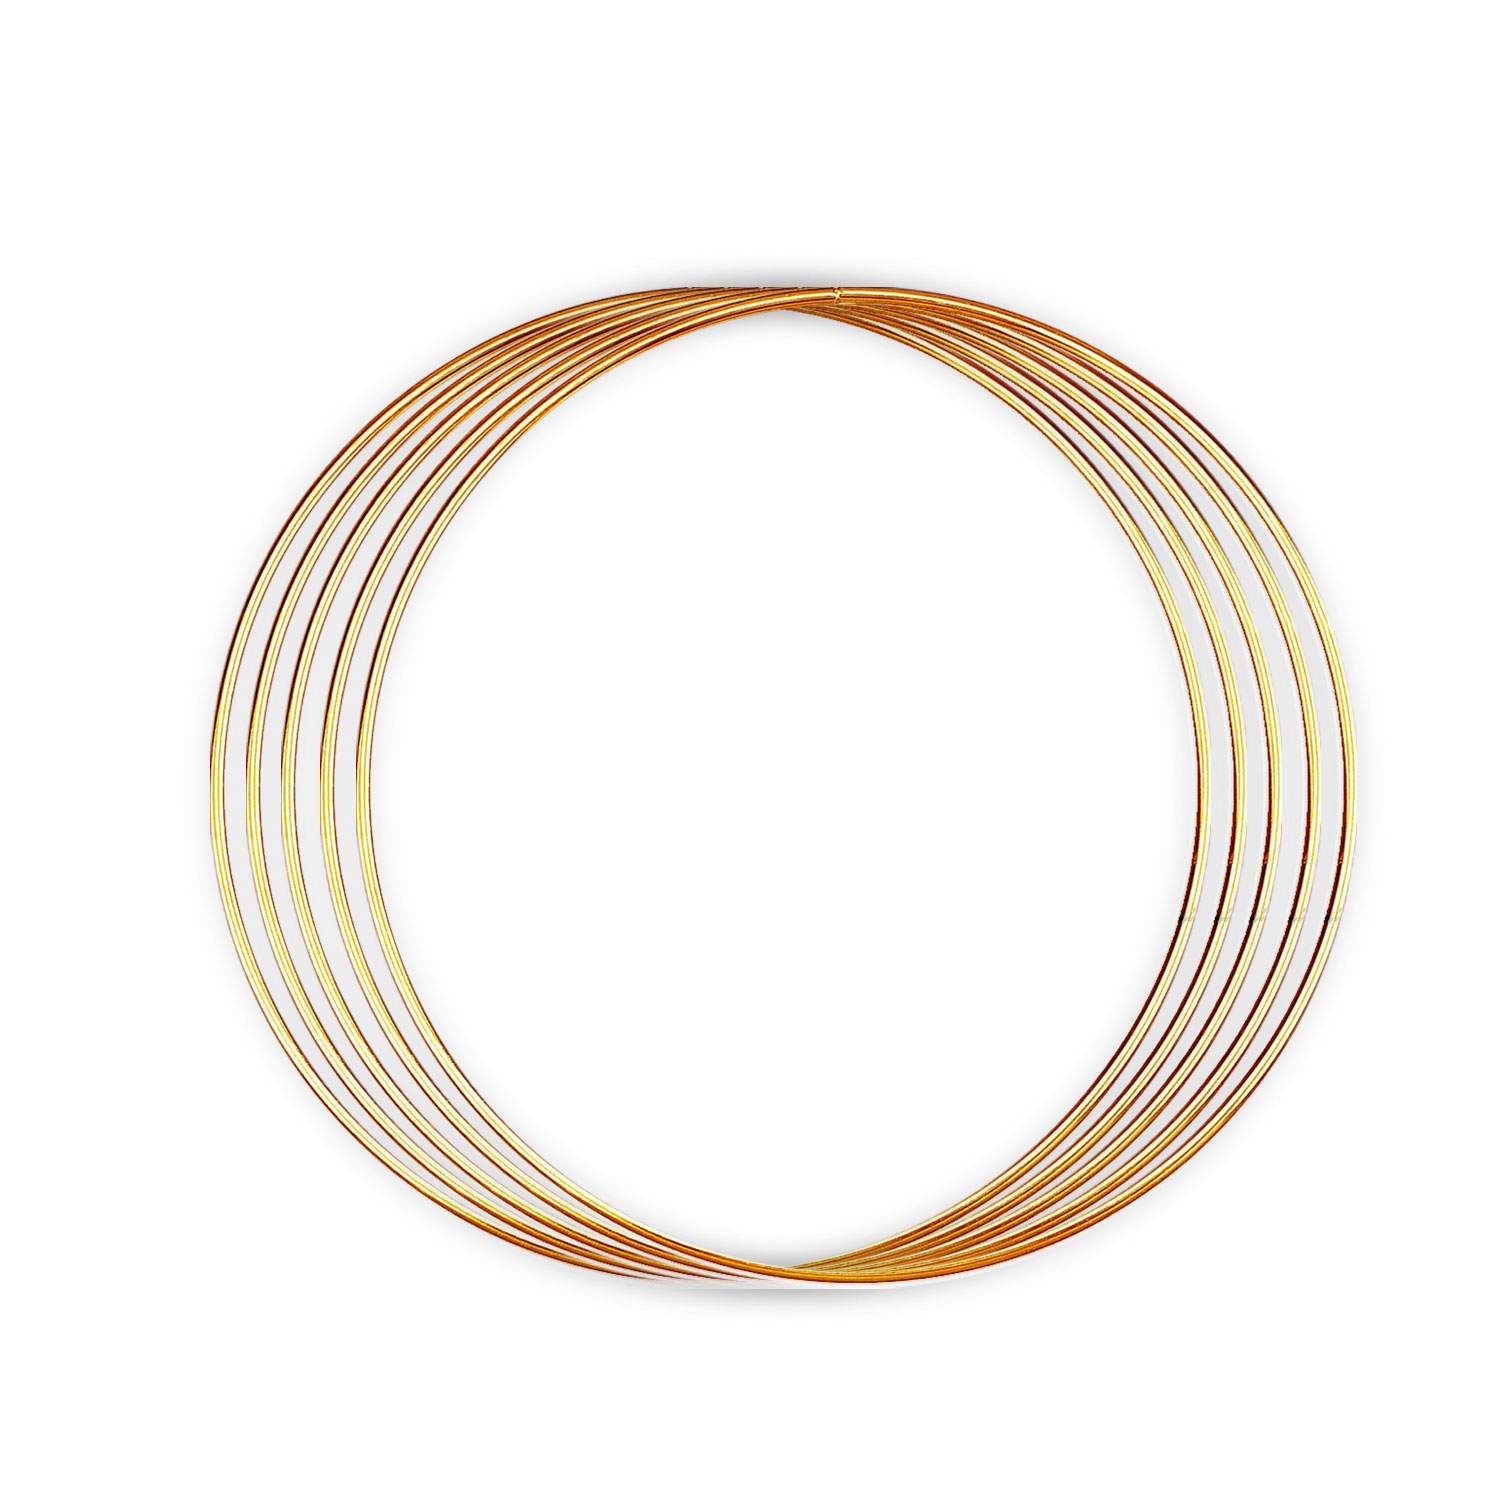 Metal Gold Rings (10 inch, 1 Pack)